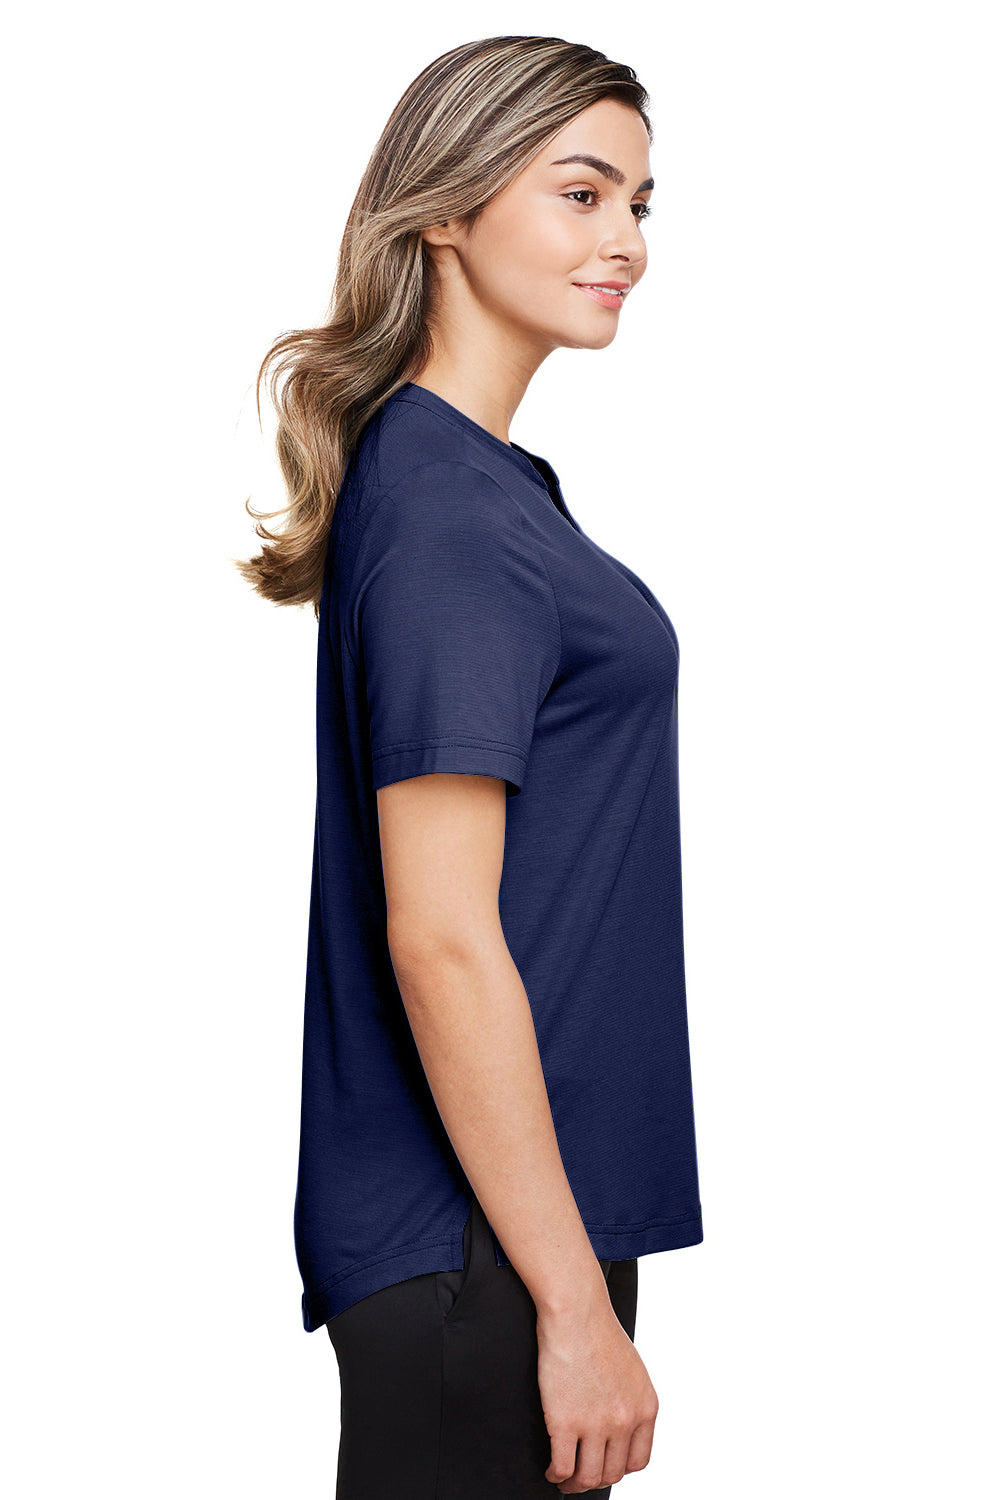 North End NE100W Womens Jaq Performance Moisture Wicking Short Sleeve Polo Shirt Navy Blue Side